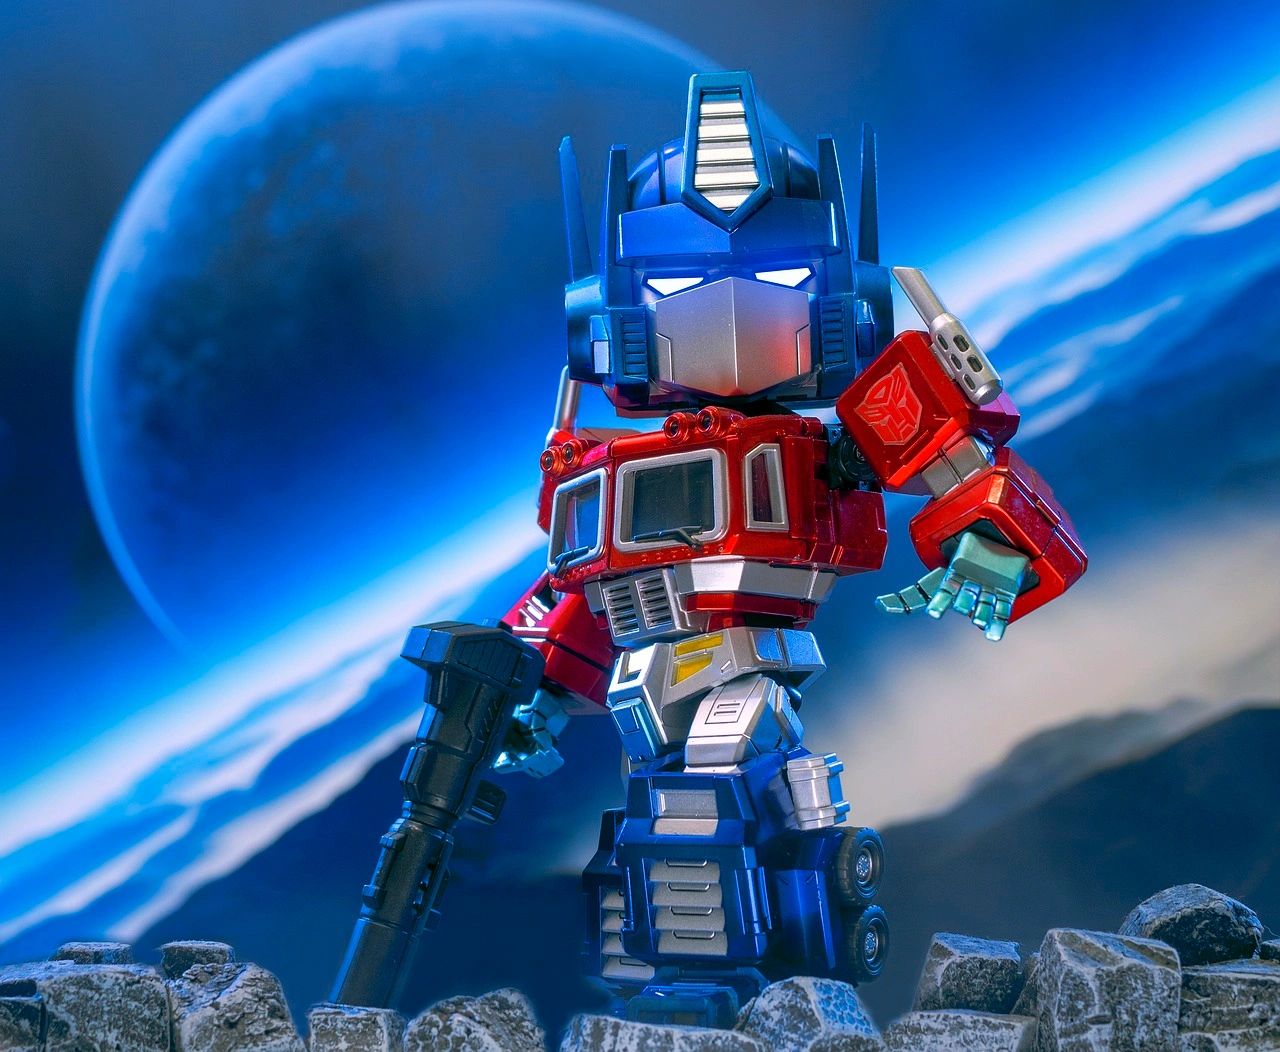 Stock image of Optimus Prime Transformers